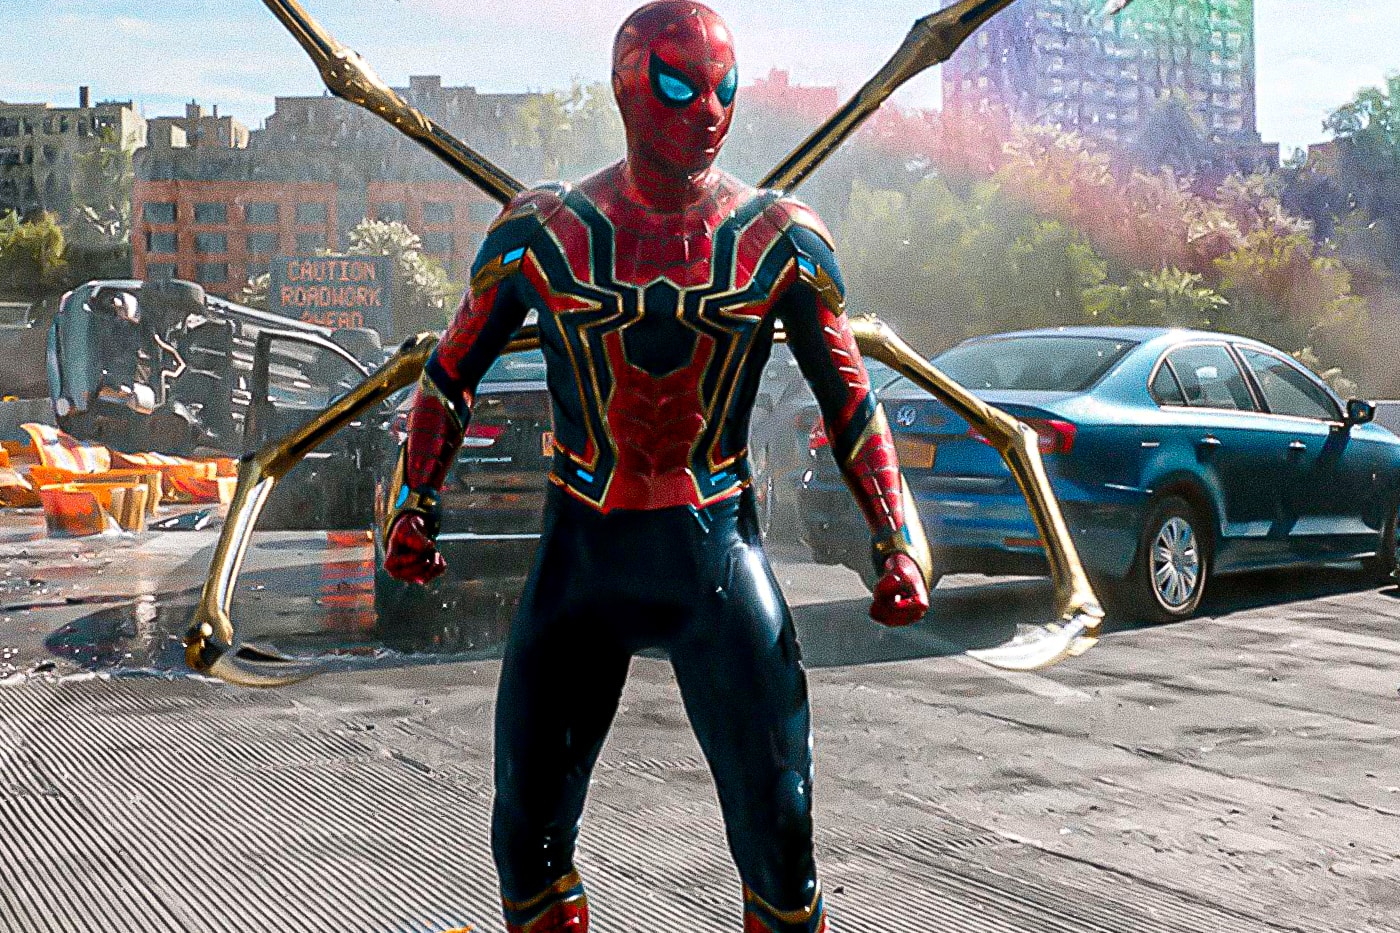 Spider Man No Way Home Trailer Breaks avengers Endgame viewing Record tom holland zendaya peter parker mj ned doc ock alfred molina green goblin